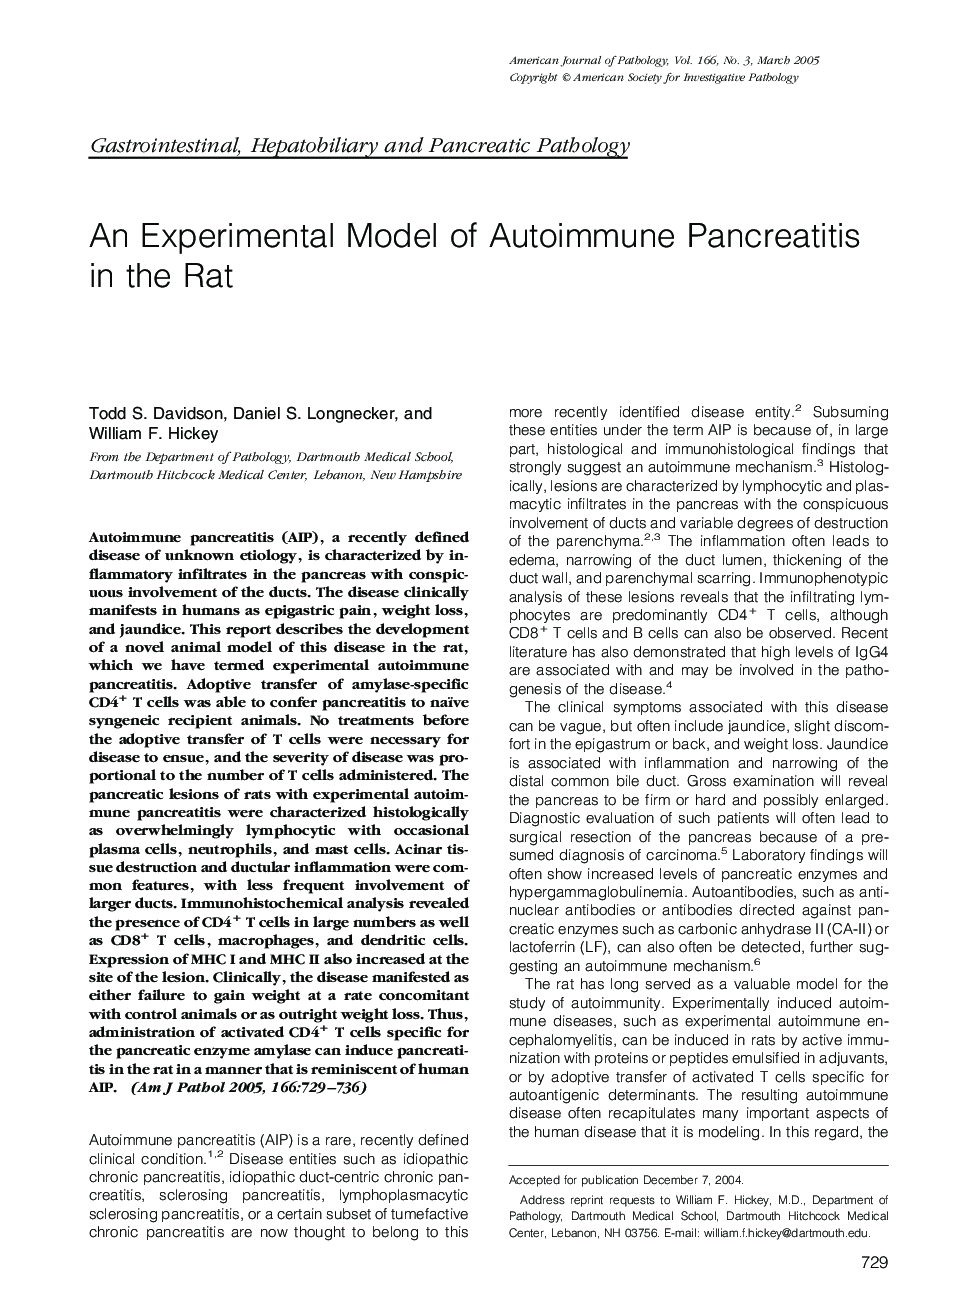 An Experimental Model of Autoimmune Pancreatitis in the Rat